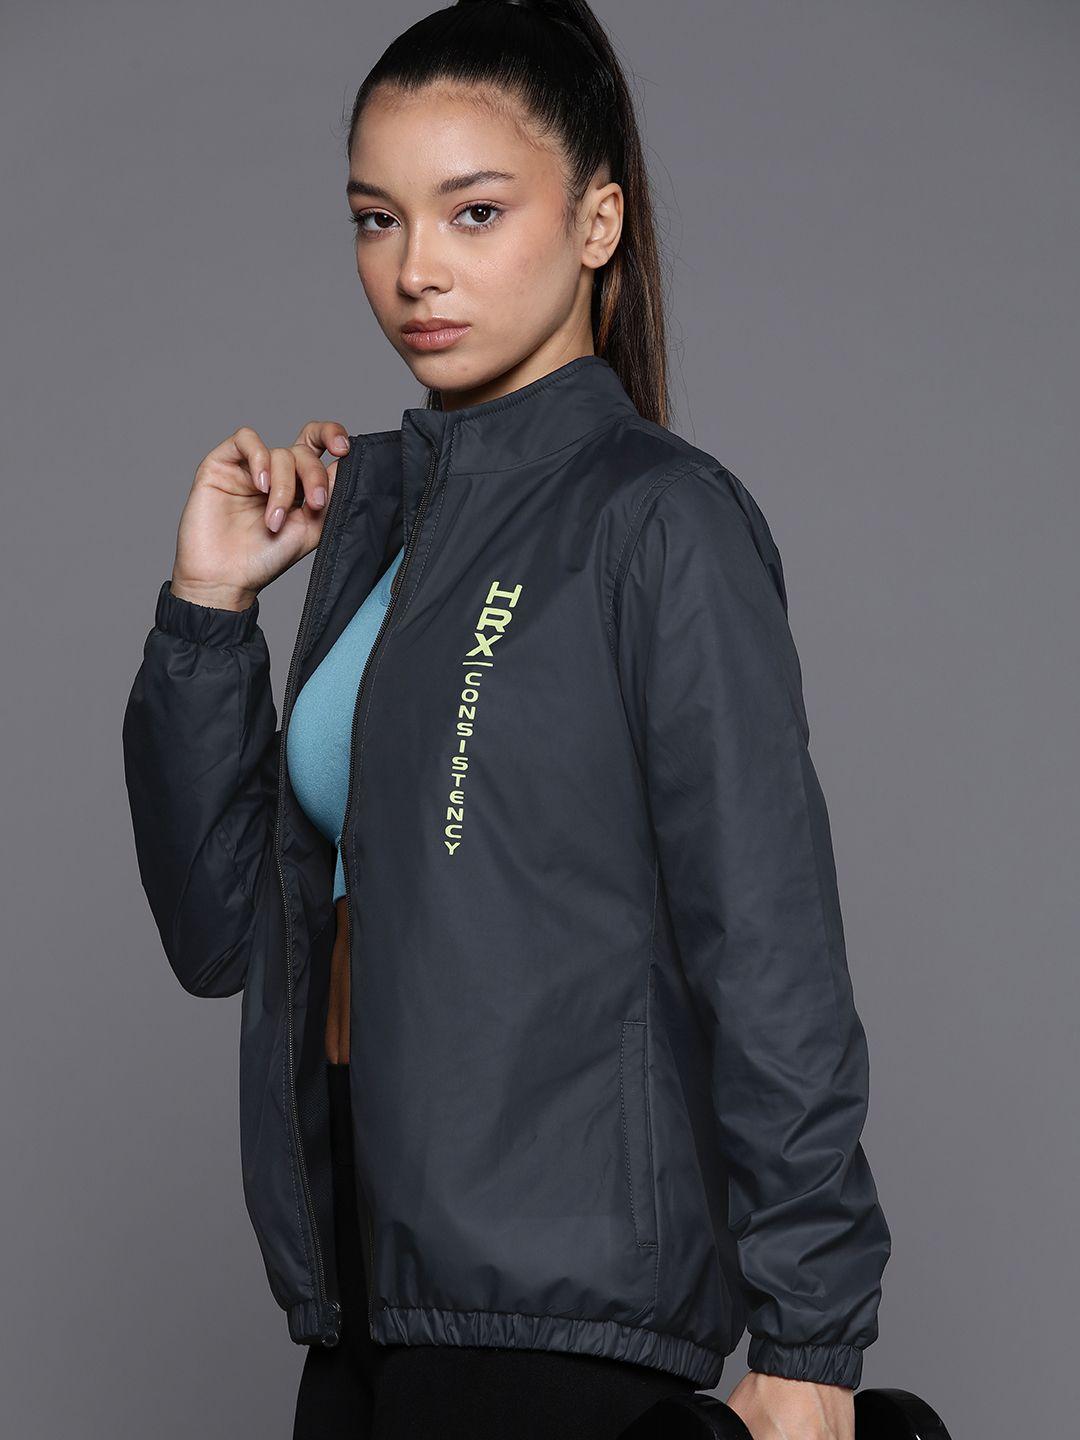 hrx-by-hrithik-roshan-women-rapid-dry-reflective-detail-training-jacket